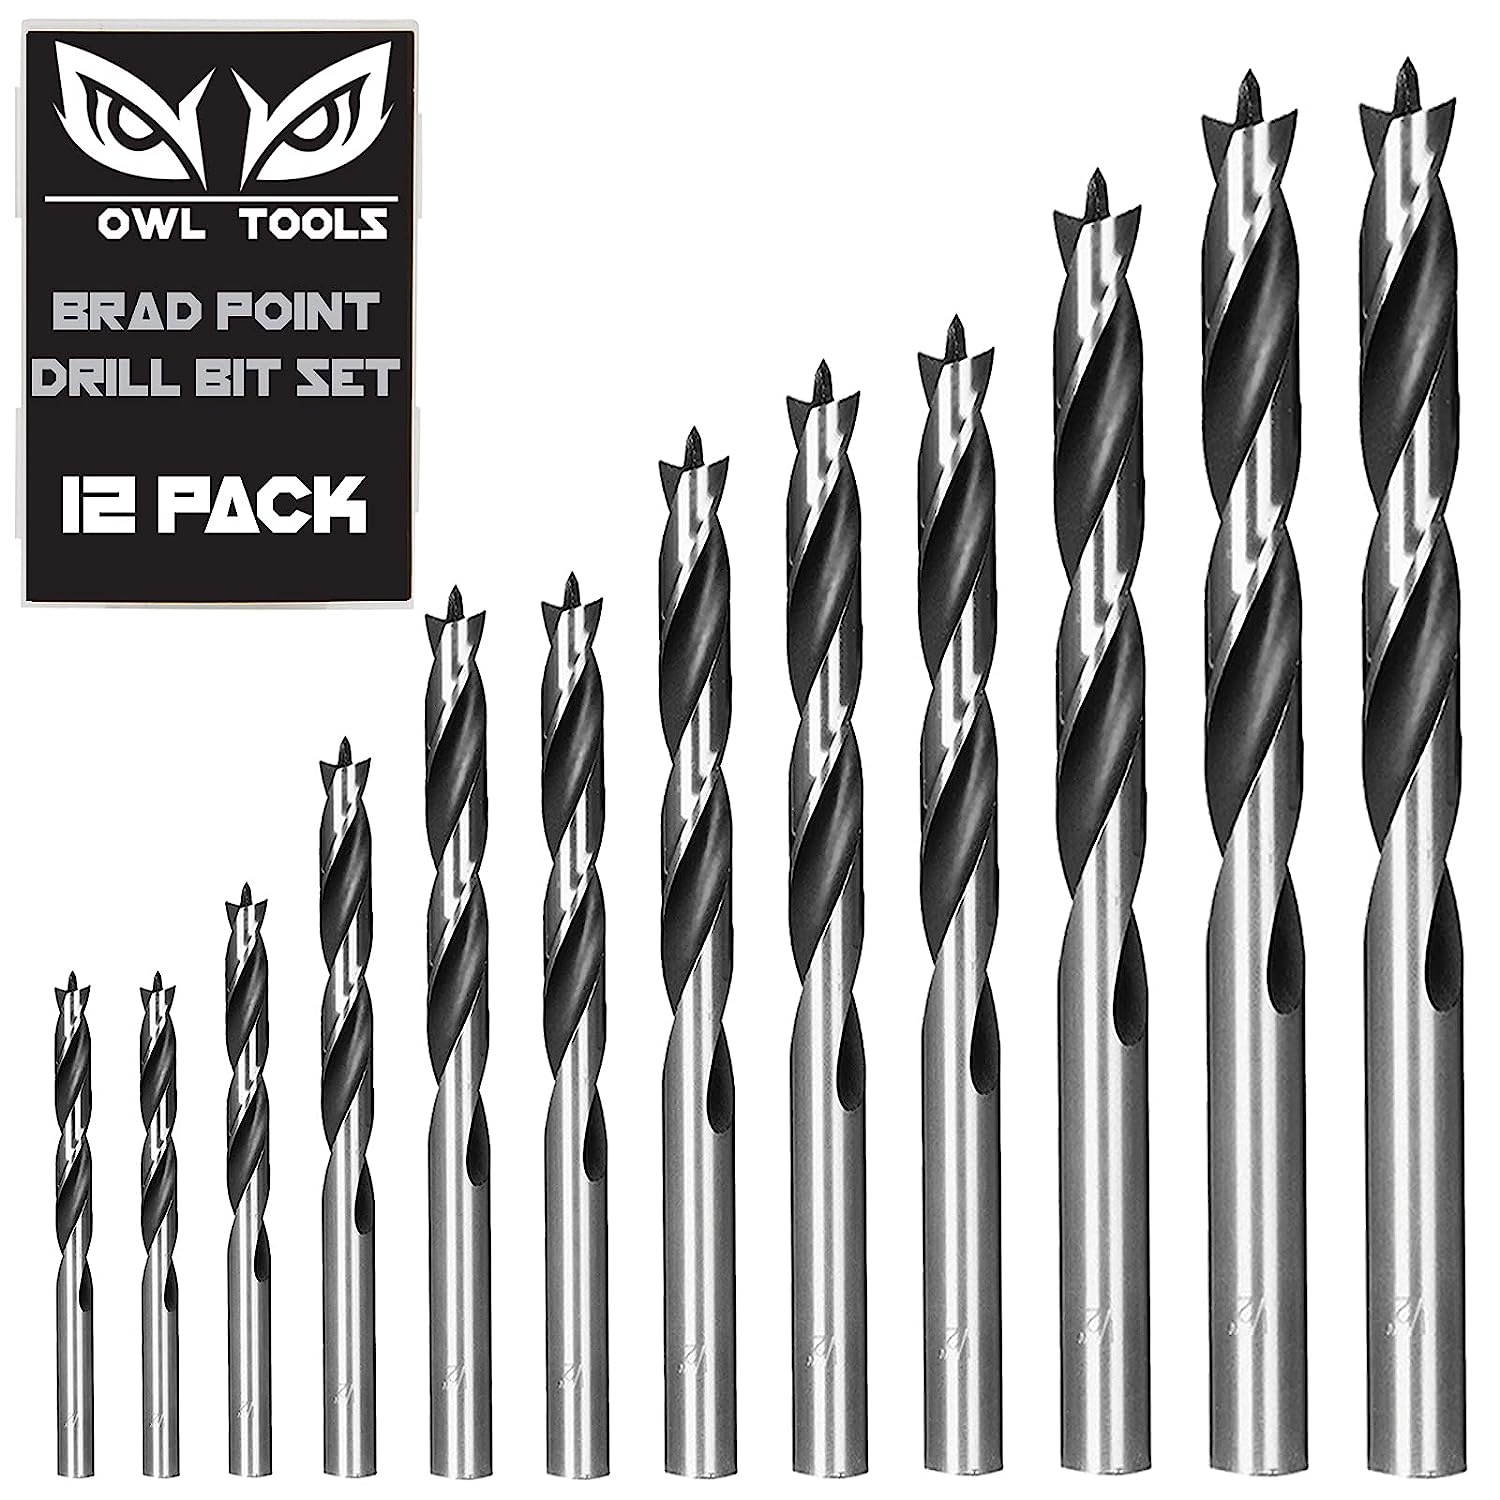 brad point drill bit set review